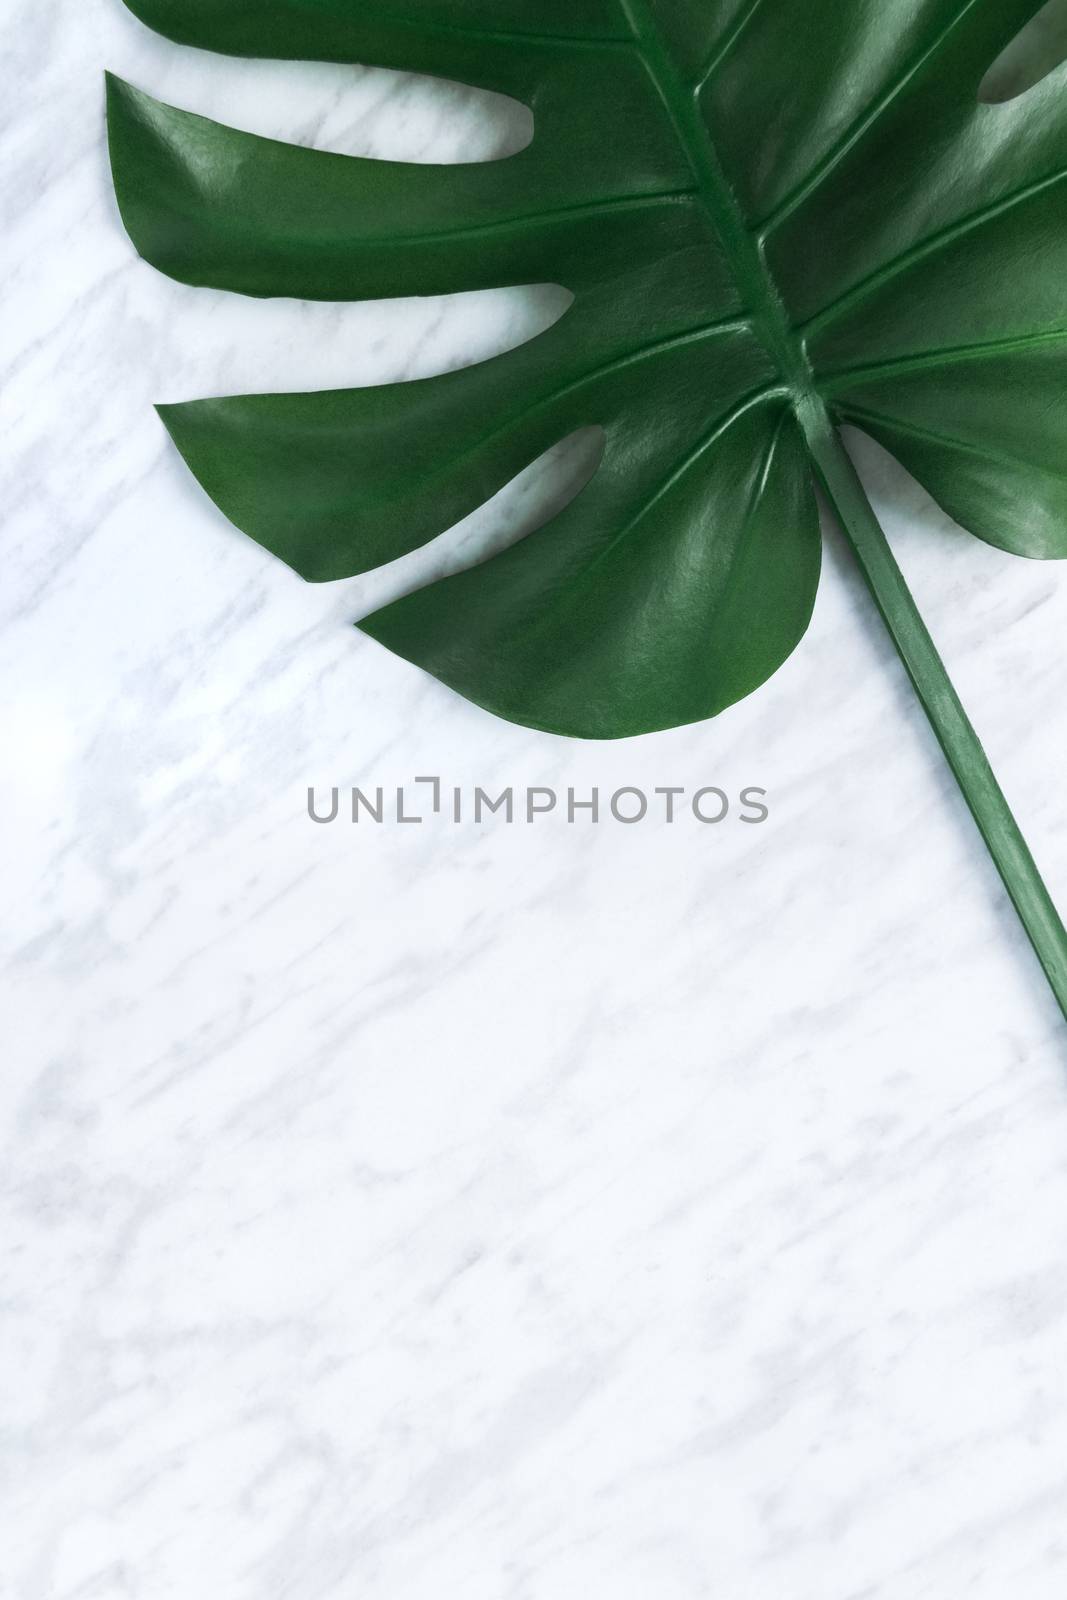 Dark tropical Monstera leaf on marble background. Popular plant in interior design.